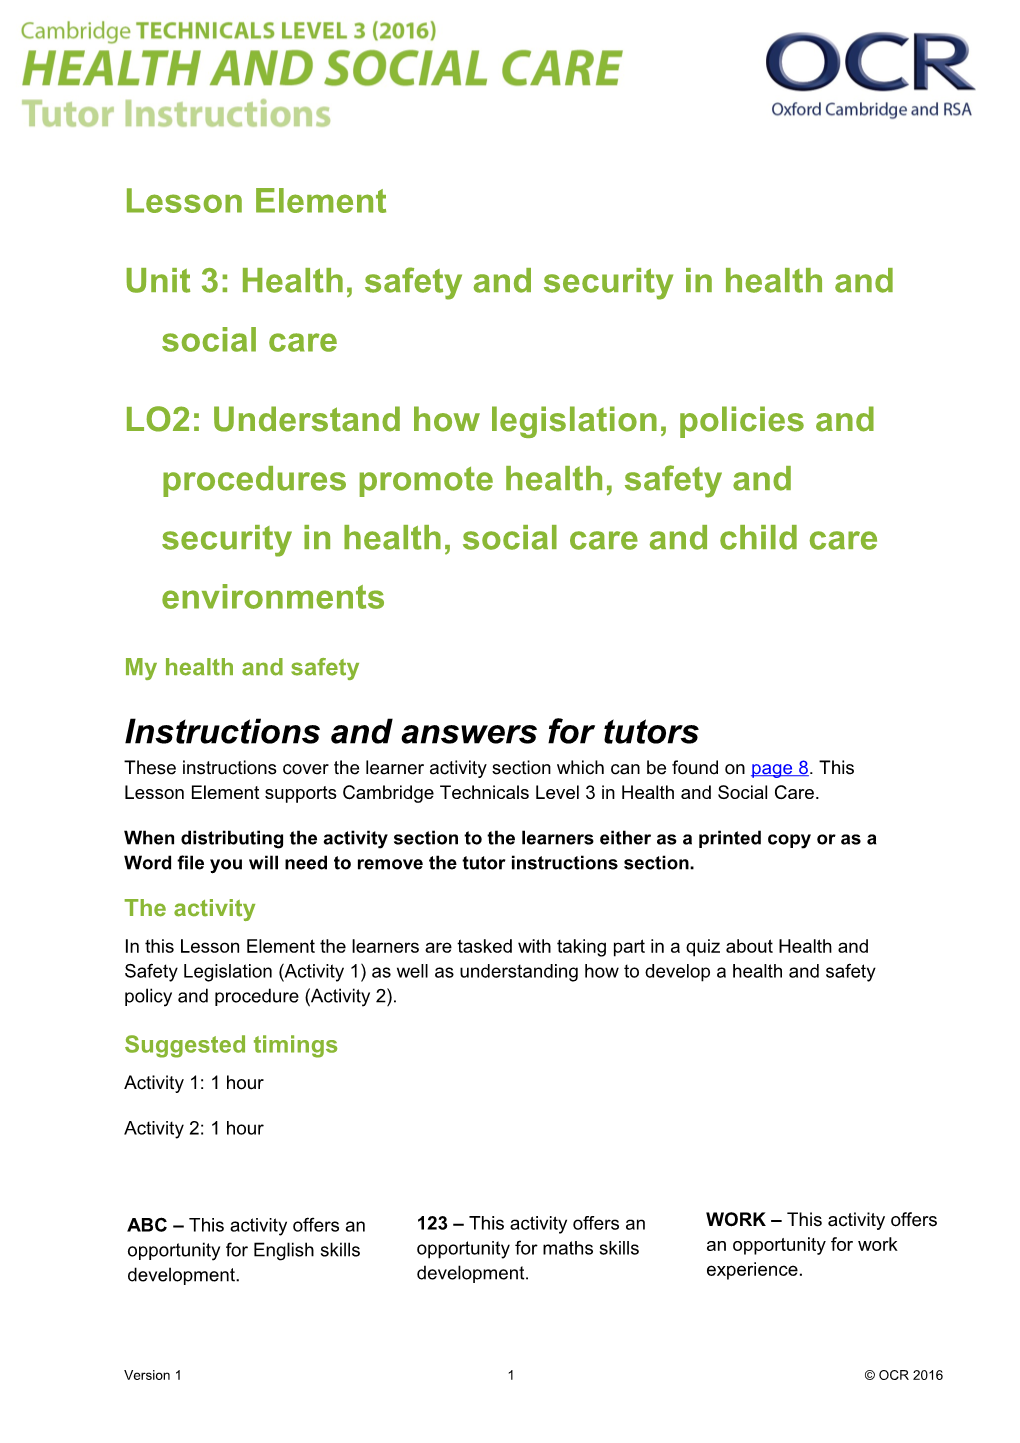 Cambridge Technicals Level 3 Health and Social Care Lesson Element